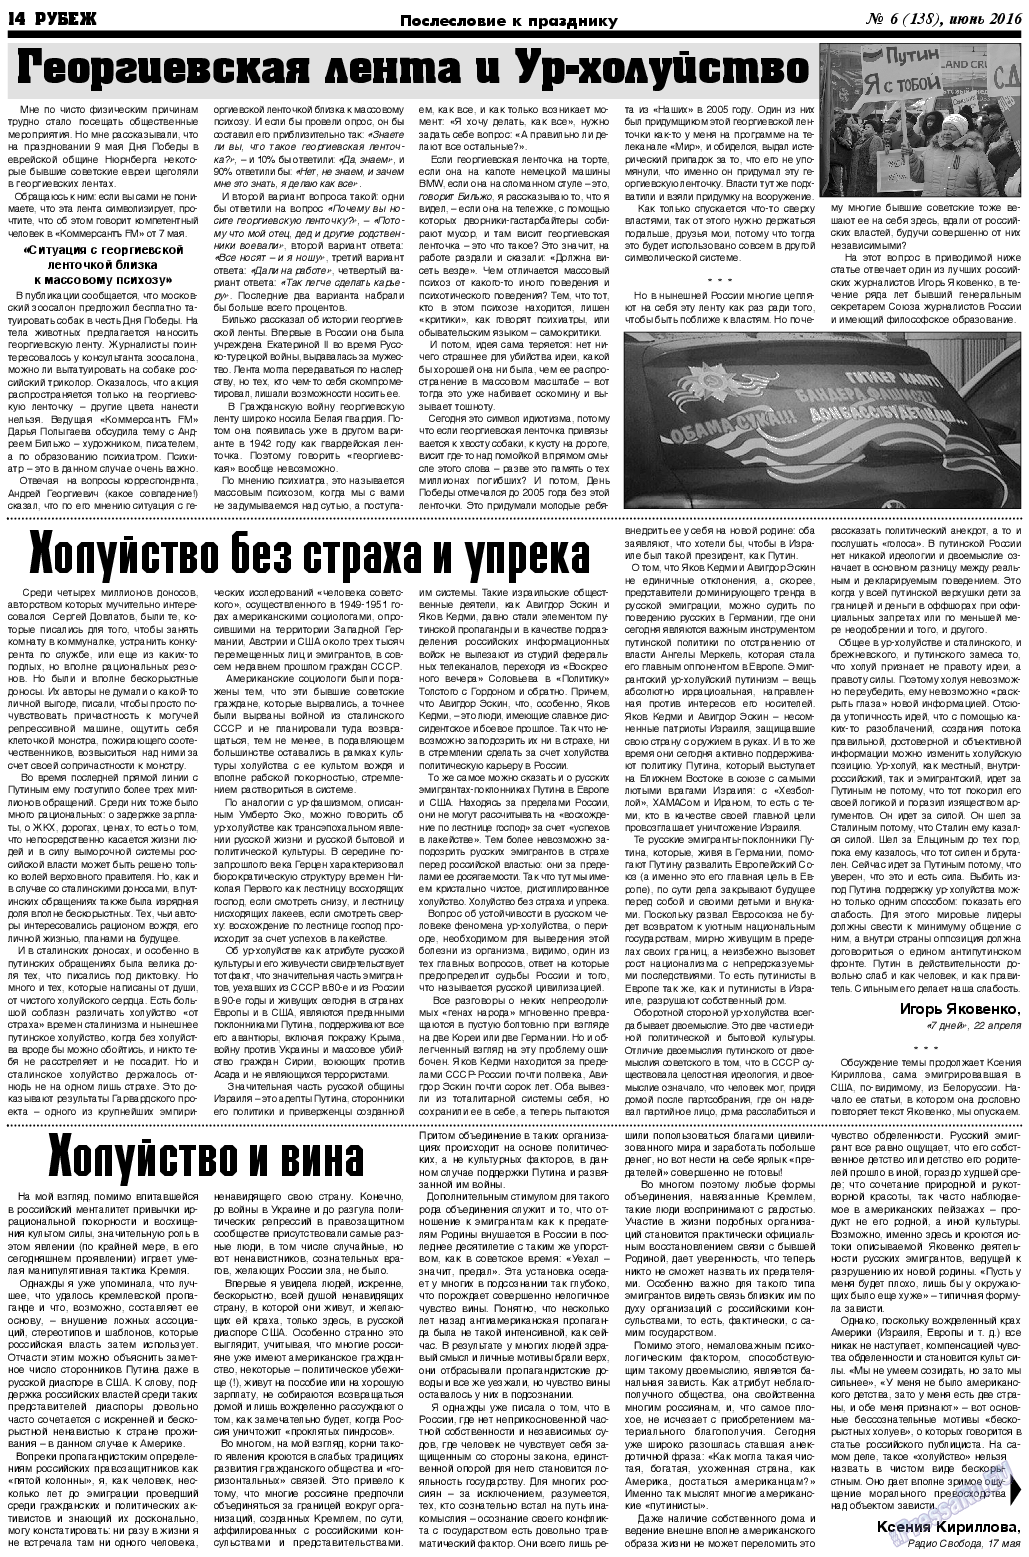 Рубеж, газета. 2016 №6 стр.14